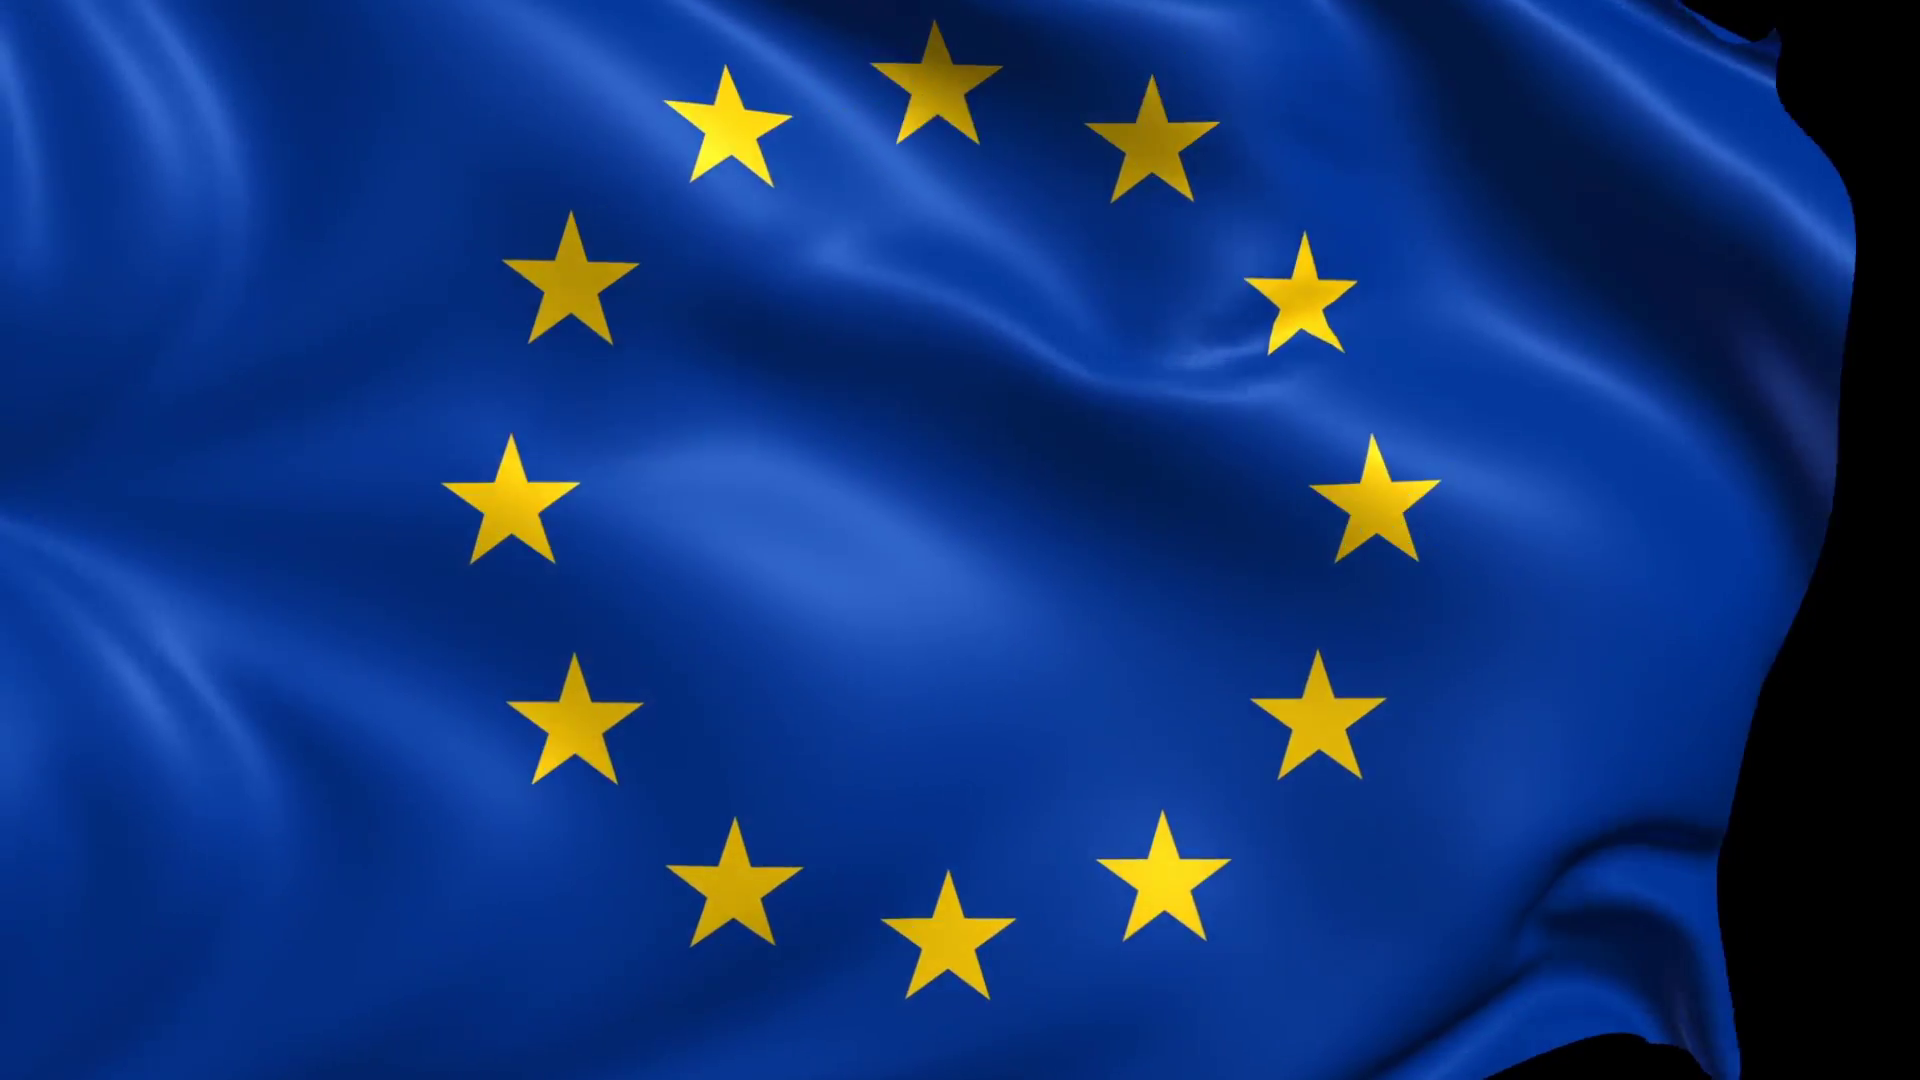 https://frederic-petit.eu/wp-content/uploads/2018/07/flag-of-the-european-union-beautiful-3d-animation-of-the-european-flag-1920_esjobzffx__F0000.png